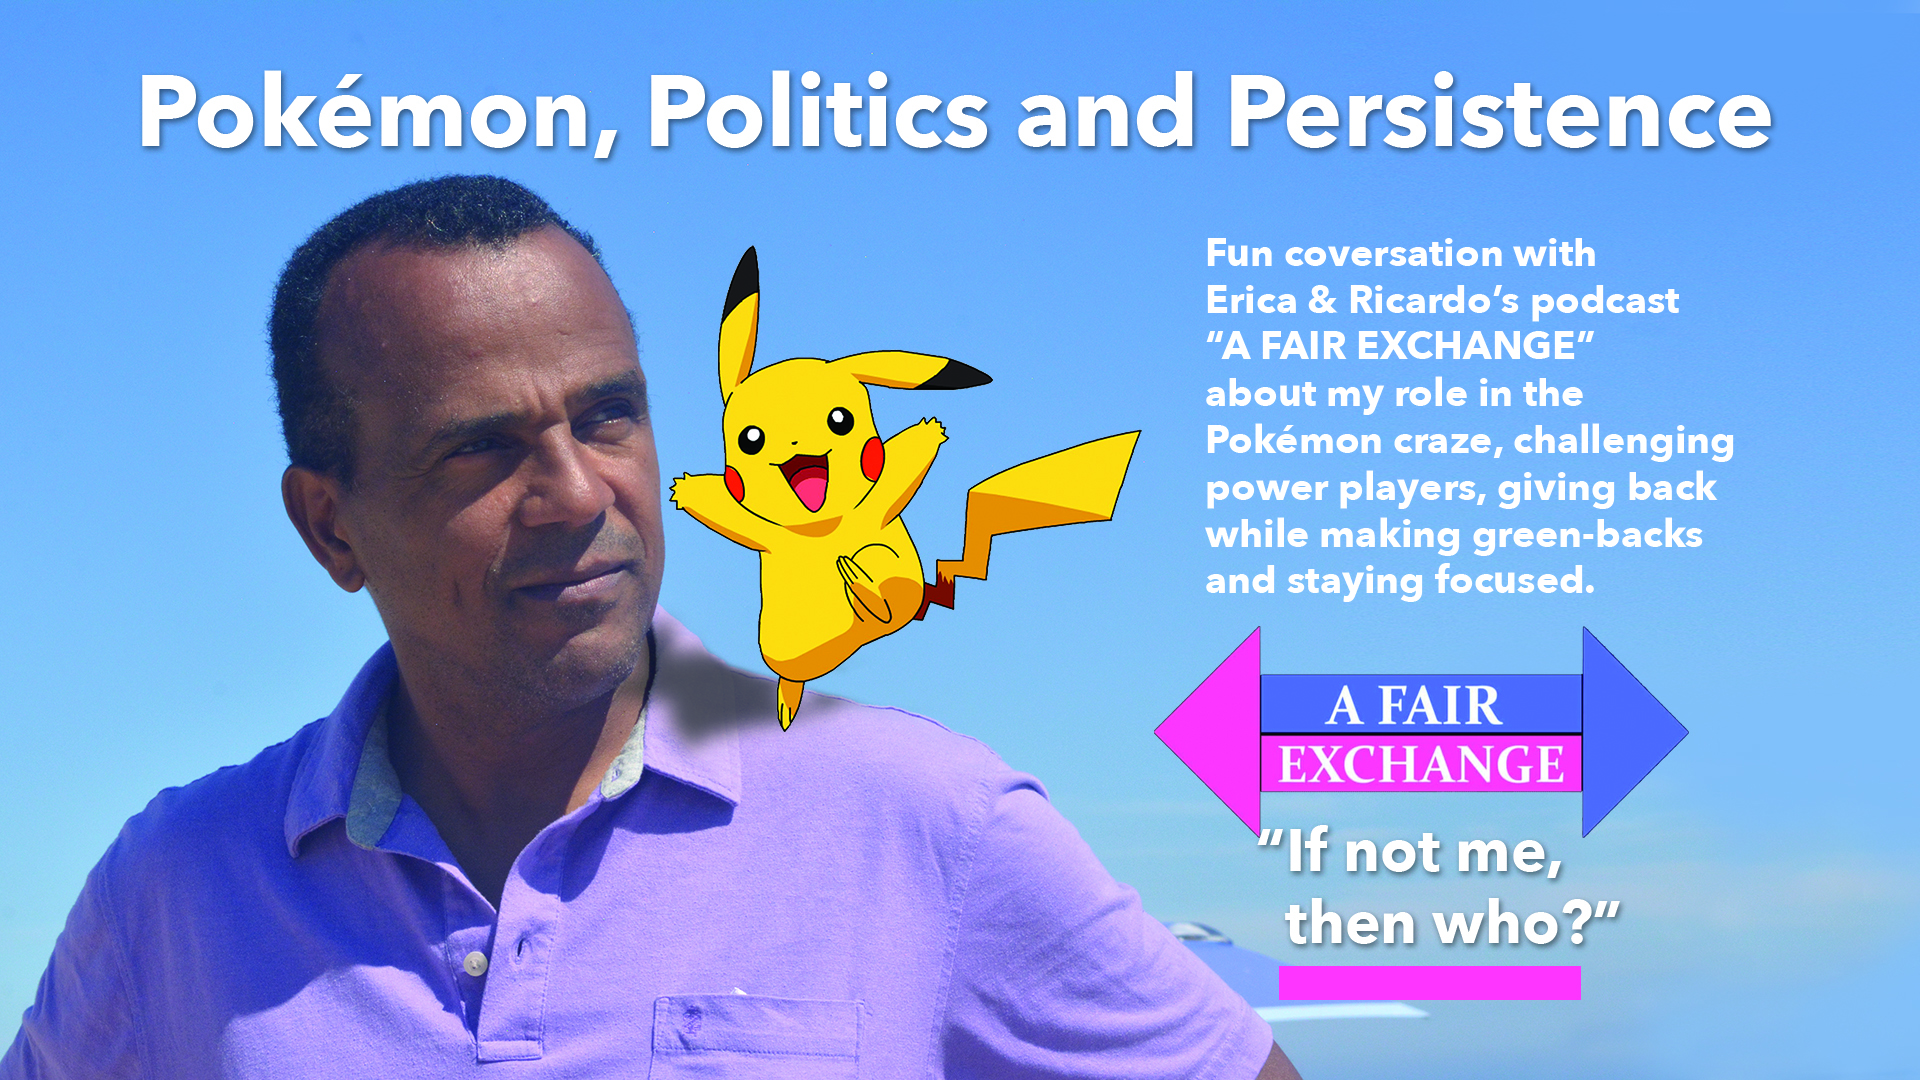 Pokémon, Politics and Persistence. Podcast Interview with MyLITV Founder Waldo Cabrera